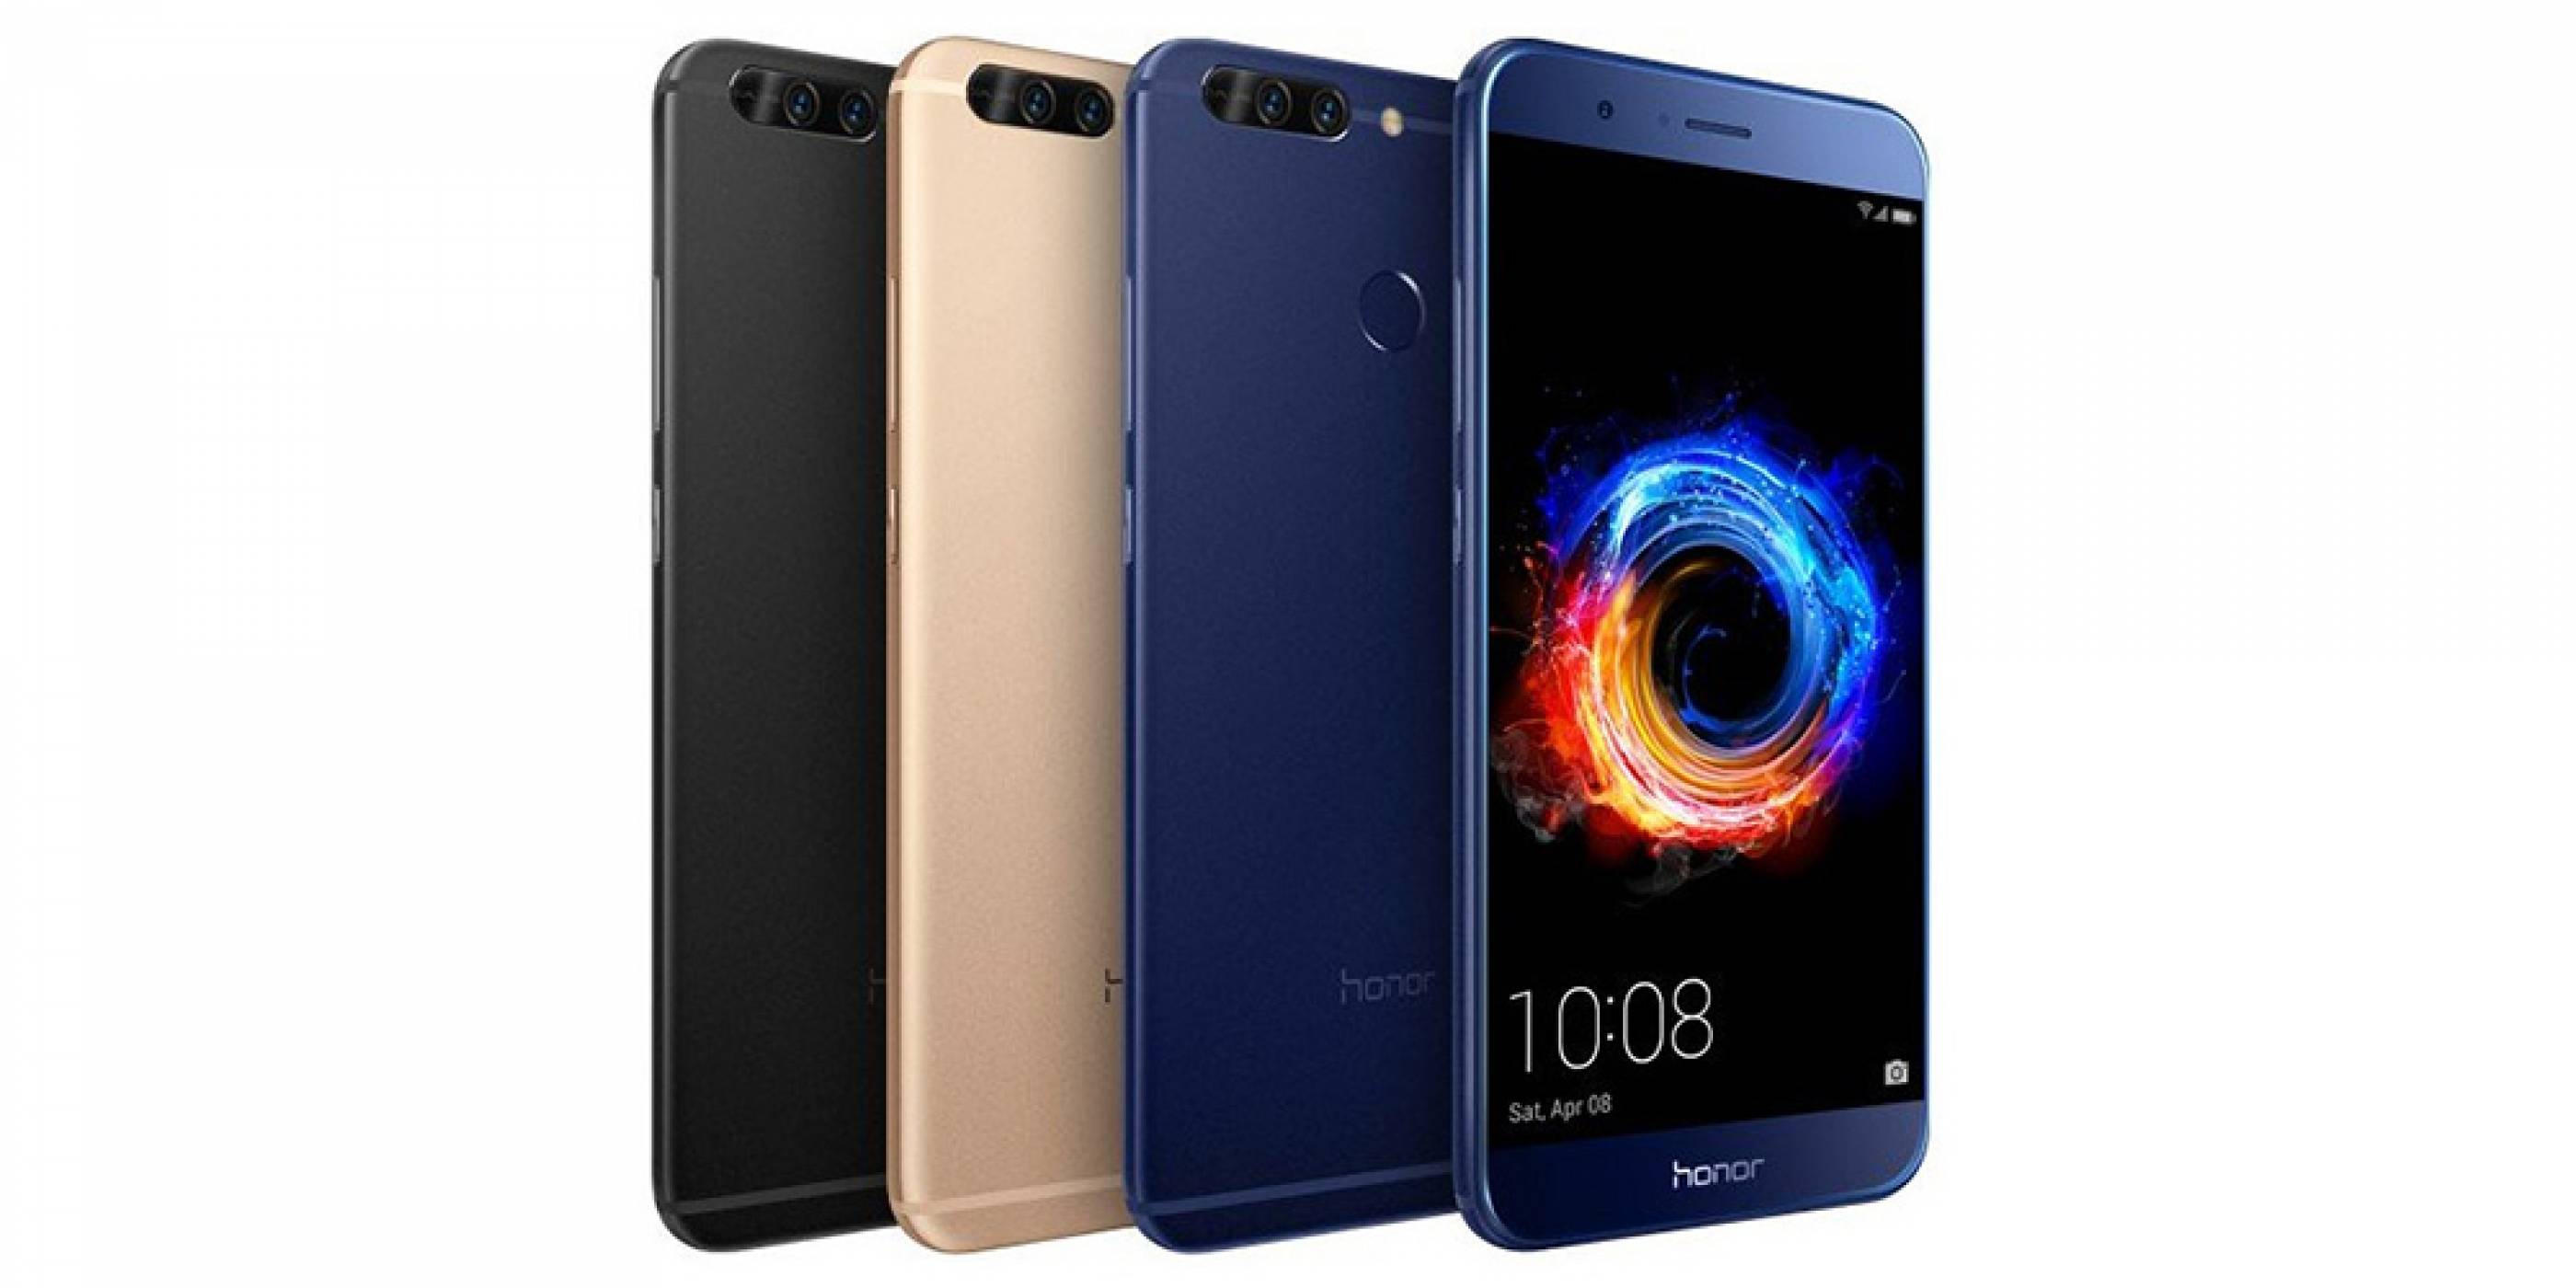 Honor 8 wifi. Huawei Honor 8 Pro. Huawei 8 Pro. Honor 8 Pro v9. Honor 8 2017.